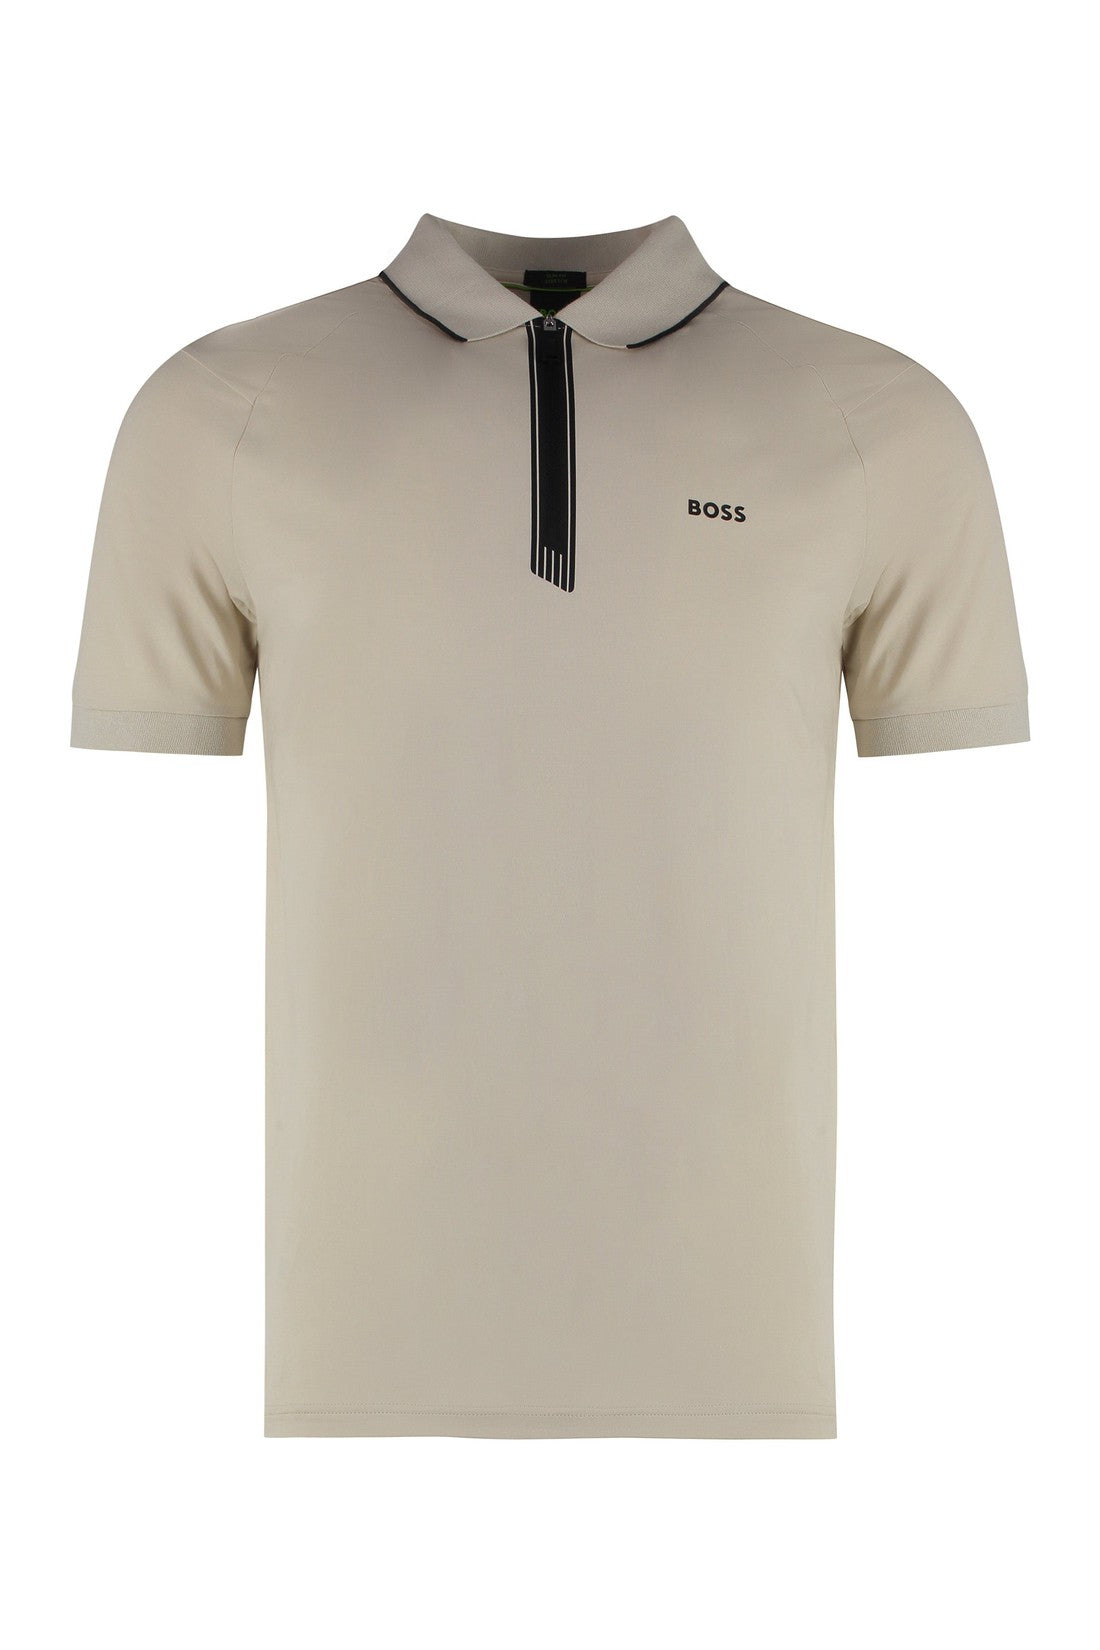 BOSS-OUTLET-SALE-Stretch cotton short sleeve polo shirt-ARCHIVIST